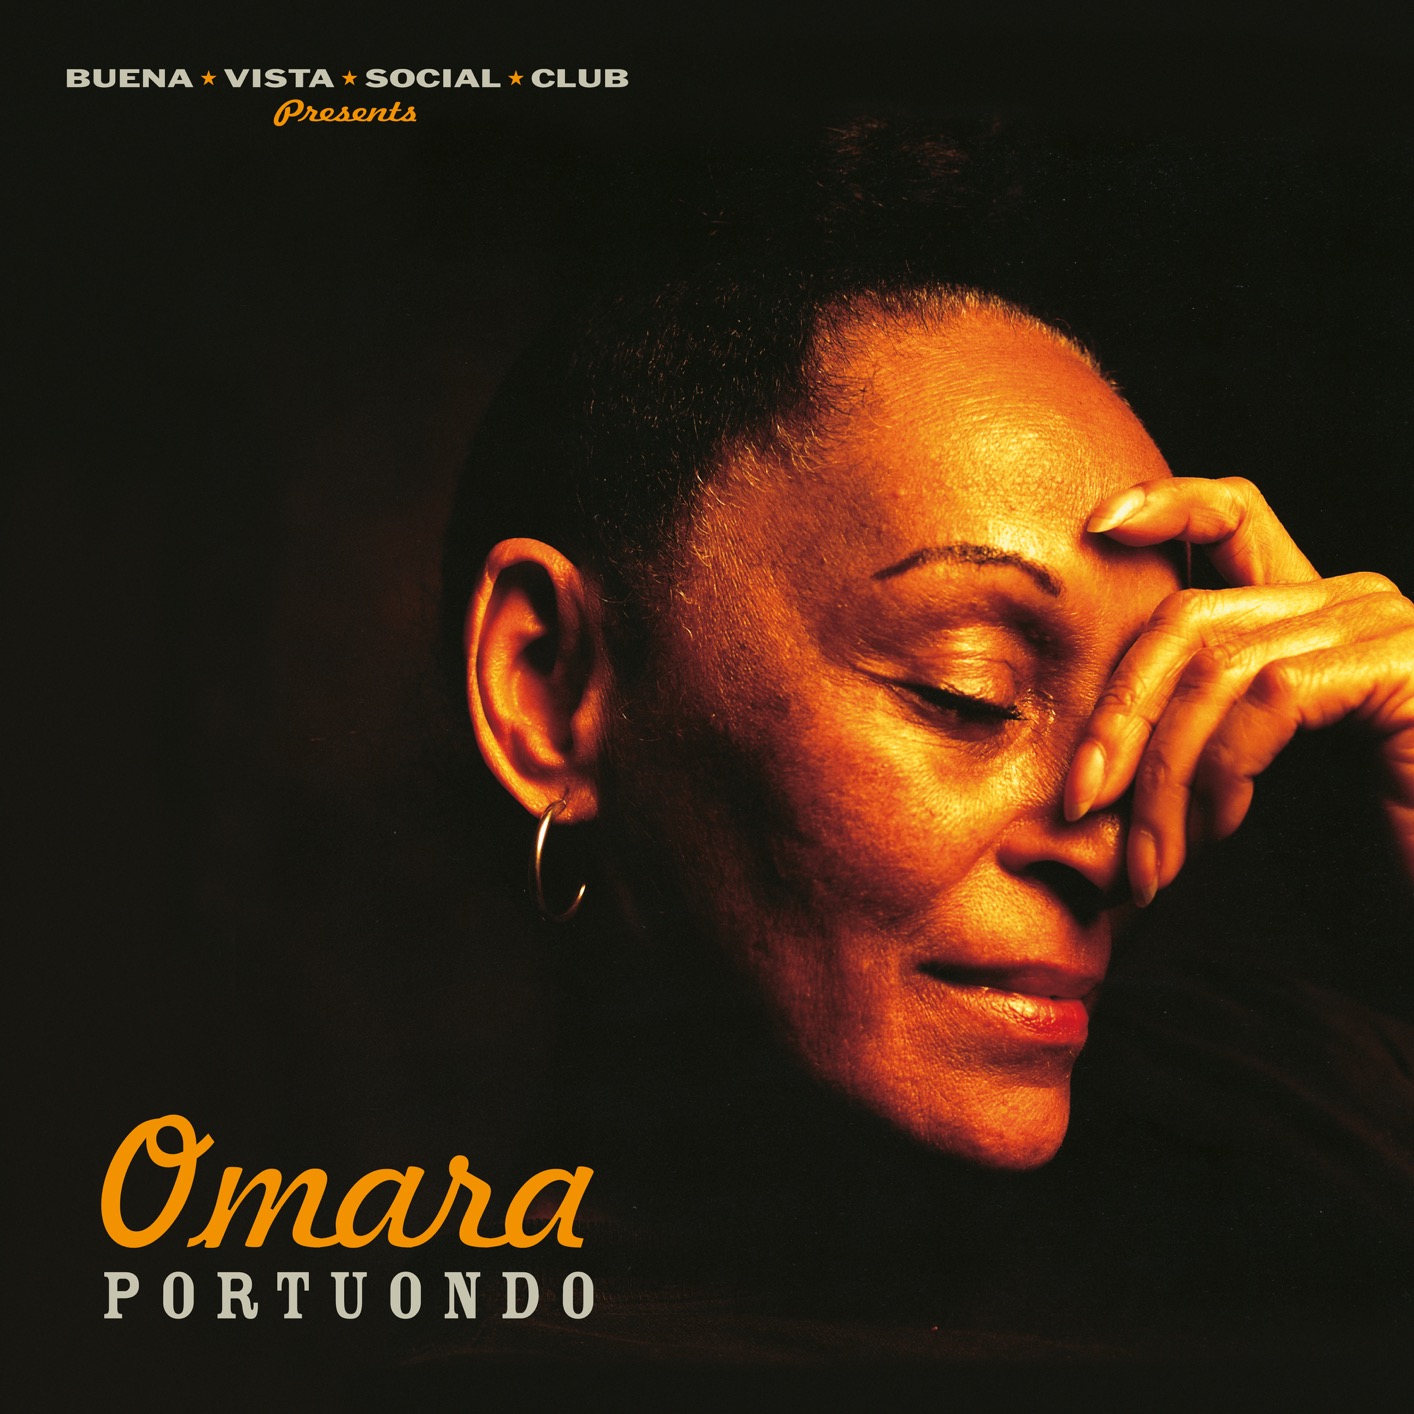 Omara Portuondo – Omara Portuondo (Buena Vista Social Club Presents) (2000/2019) [FLAC 24bit/96kHz]